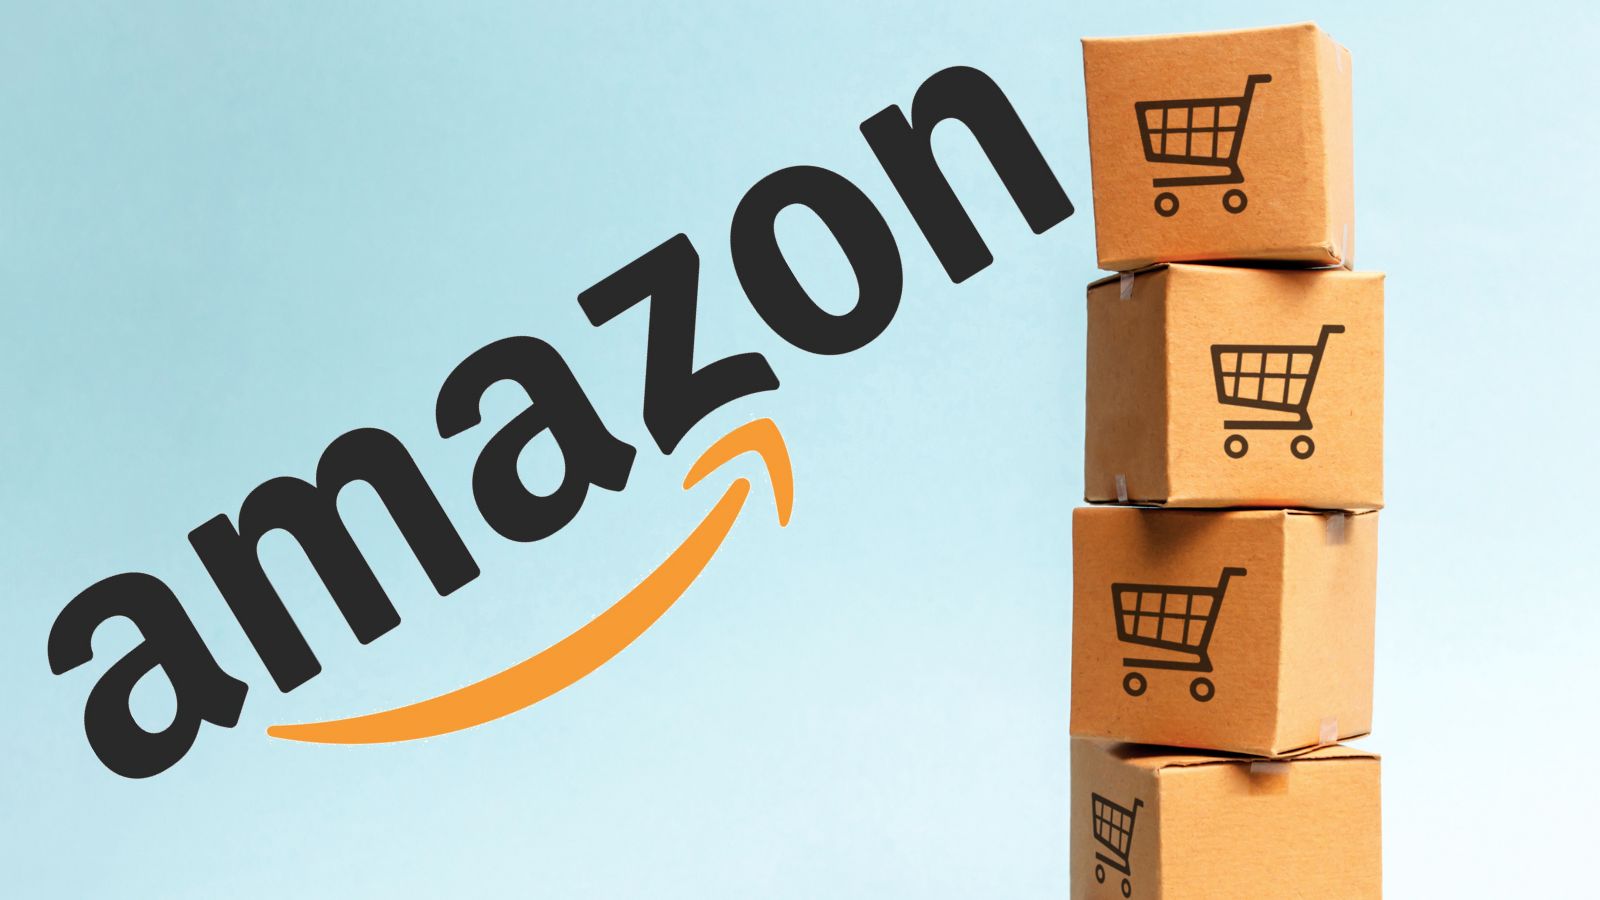 Amazon, offerte Prime al 50% di sconto distruggono Unieuro